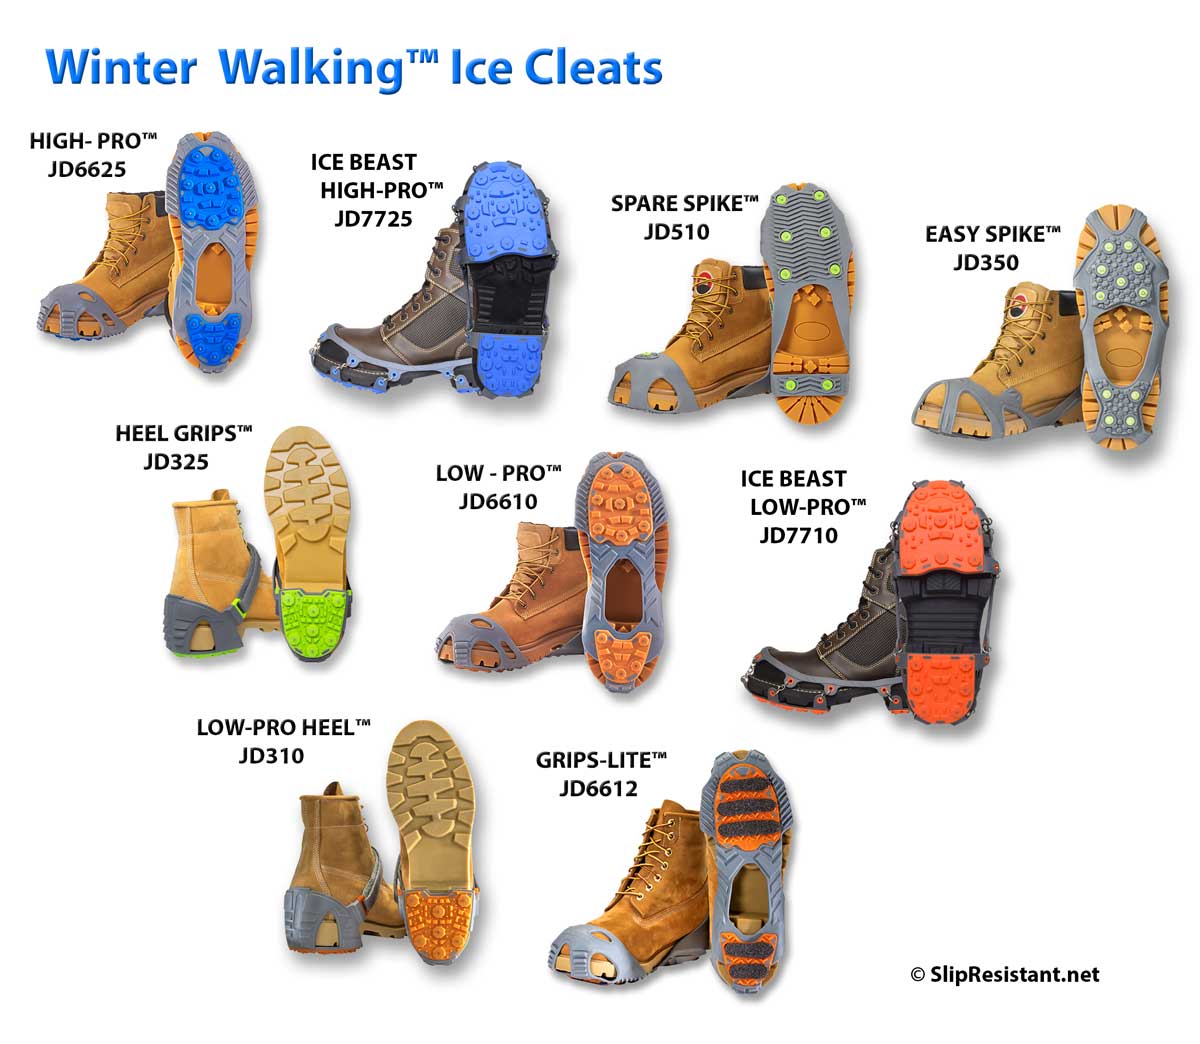 Winter Walking Heel Grips Ice Cleat 